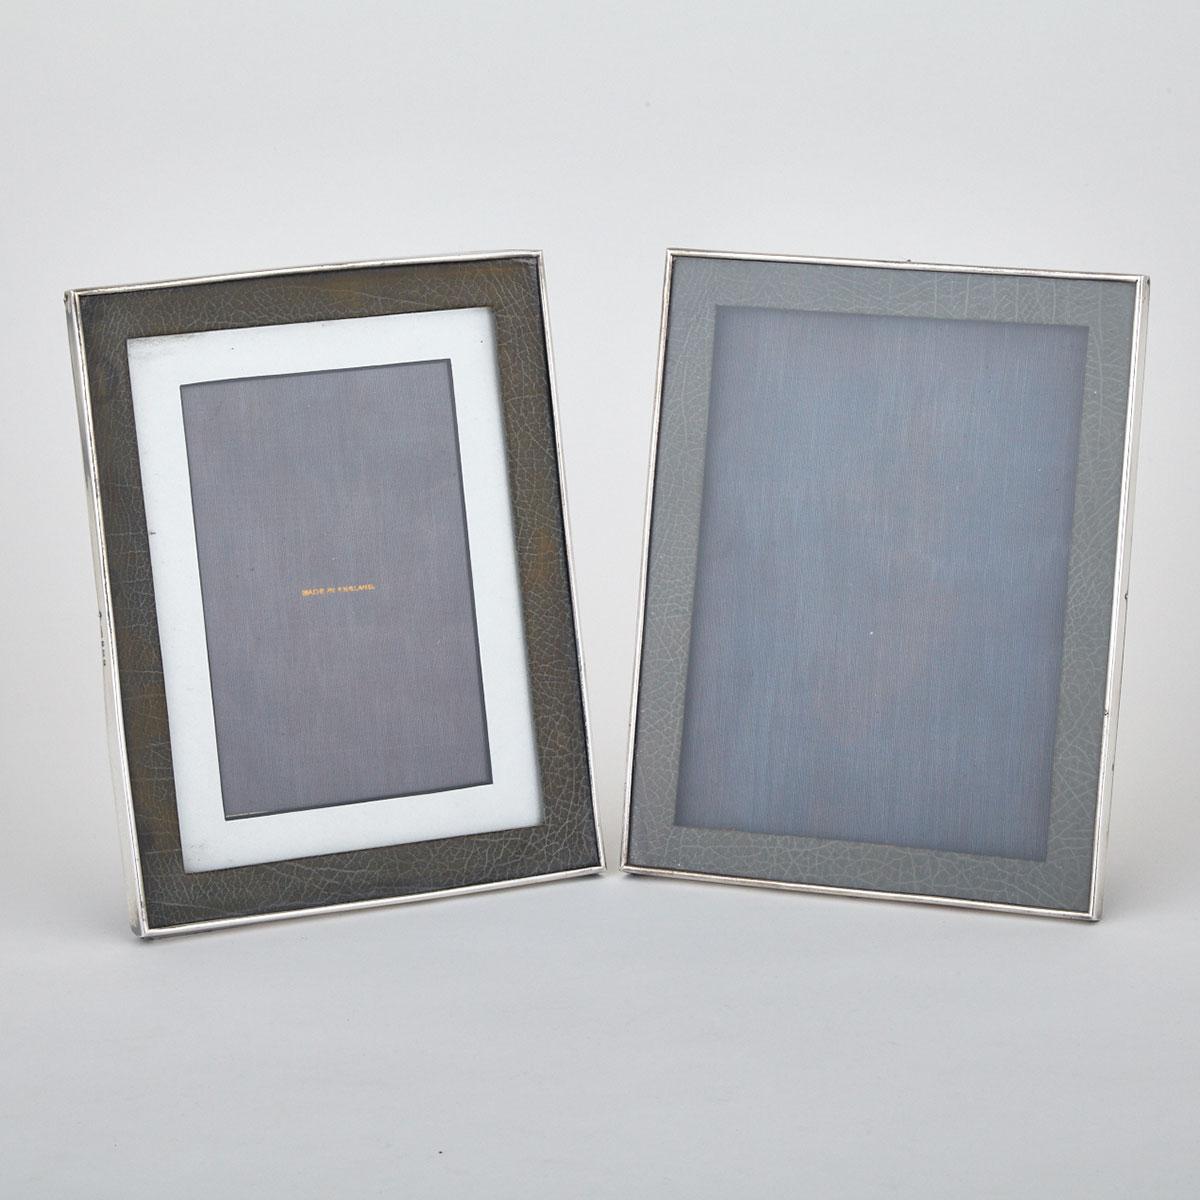 Pair of English Silver Rectangular Photograph Frames, E. Mander Ltd., Birmingham, 1926